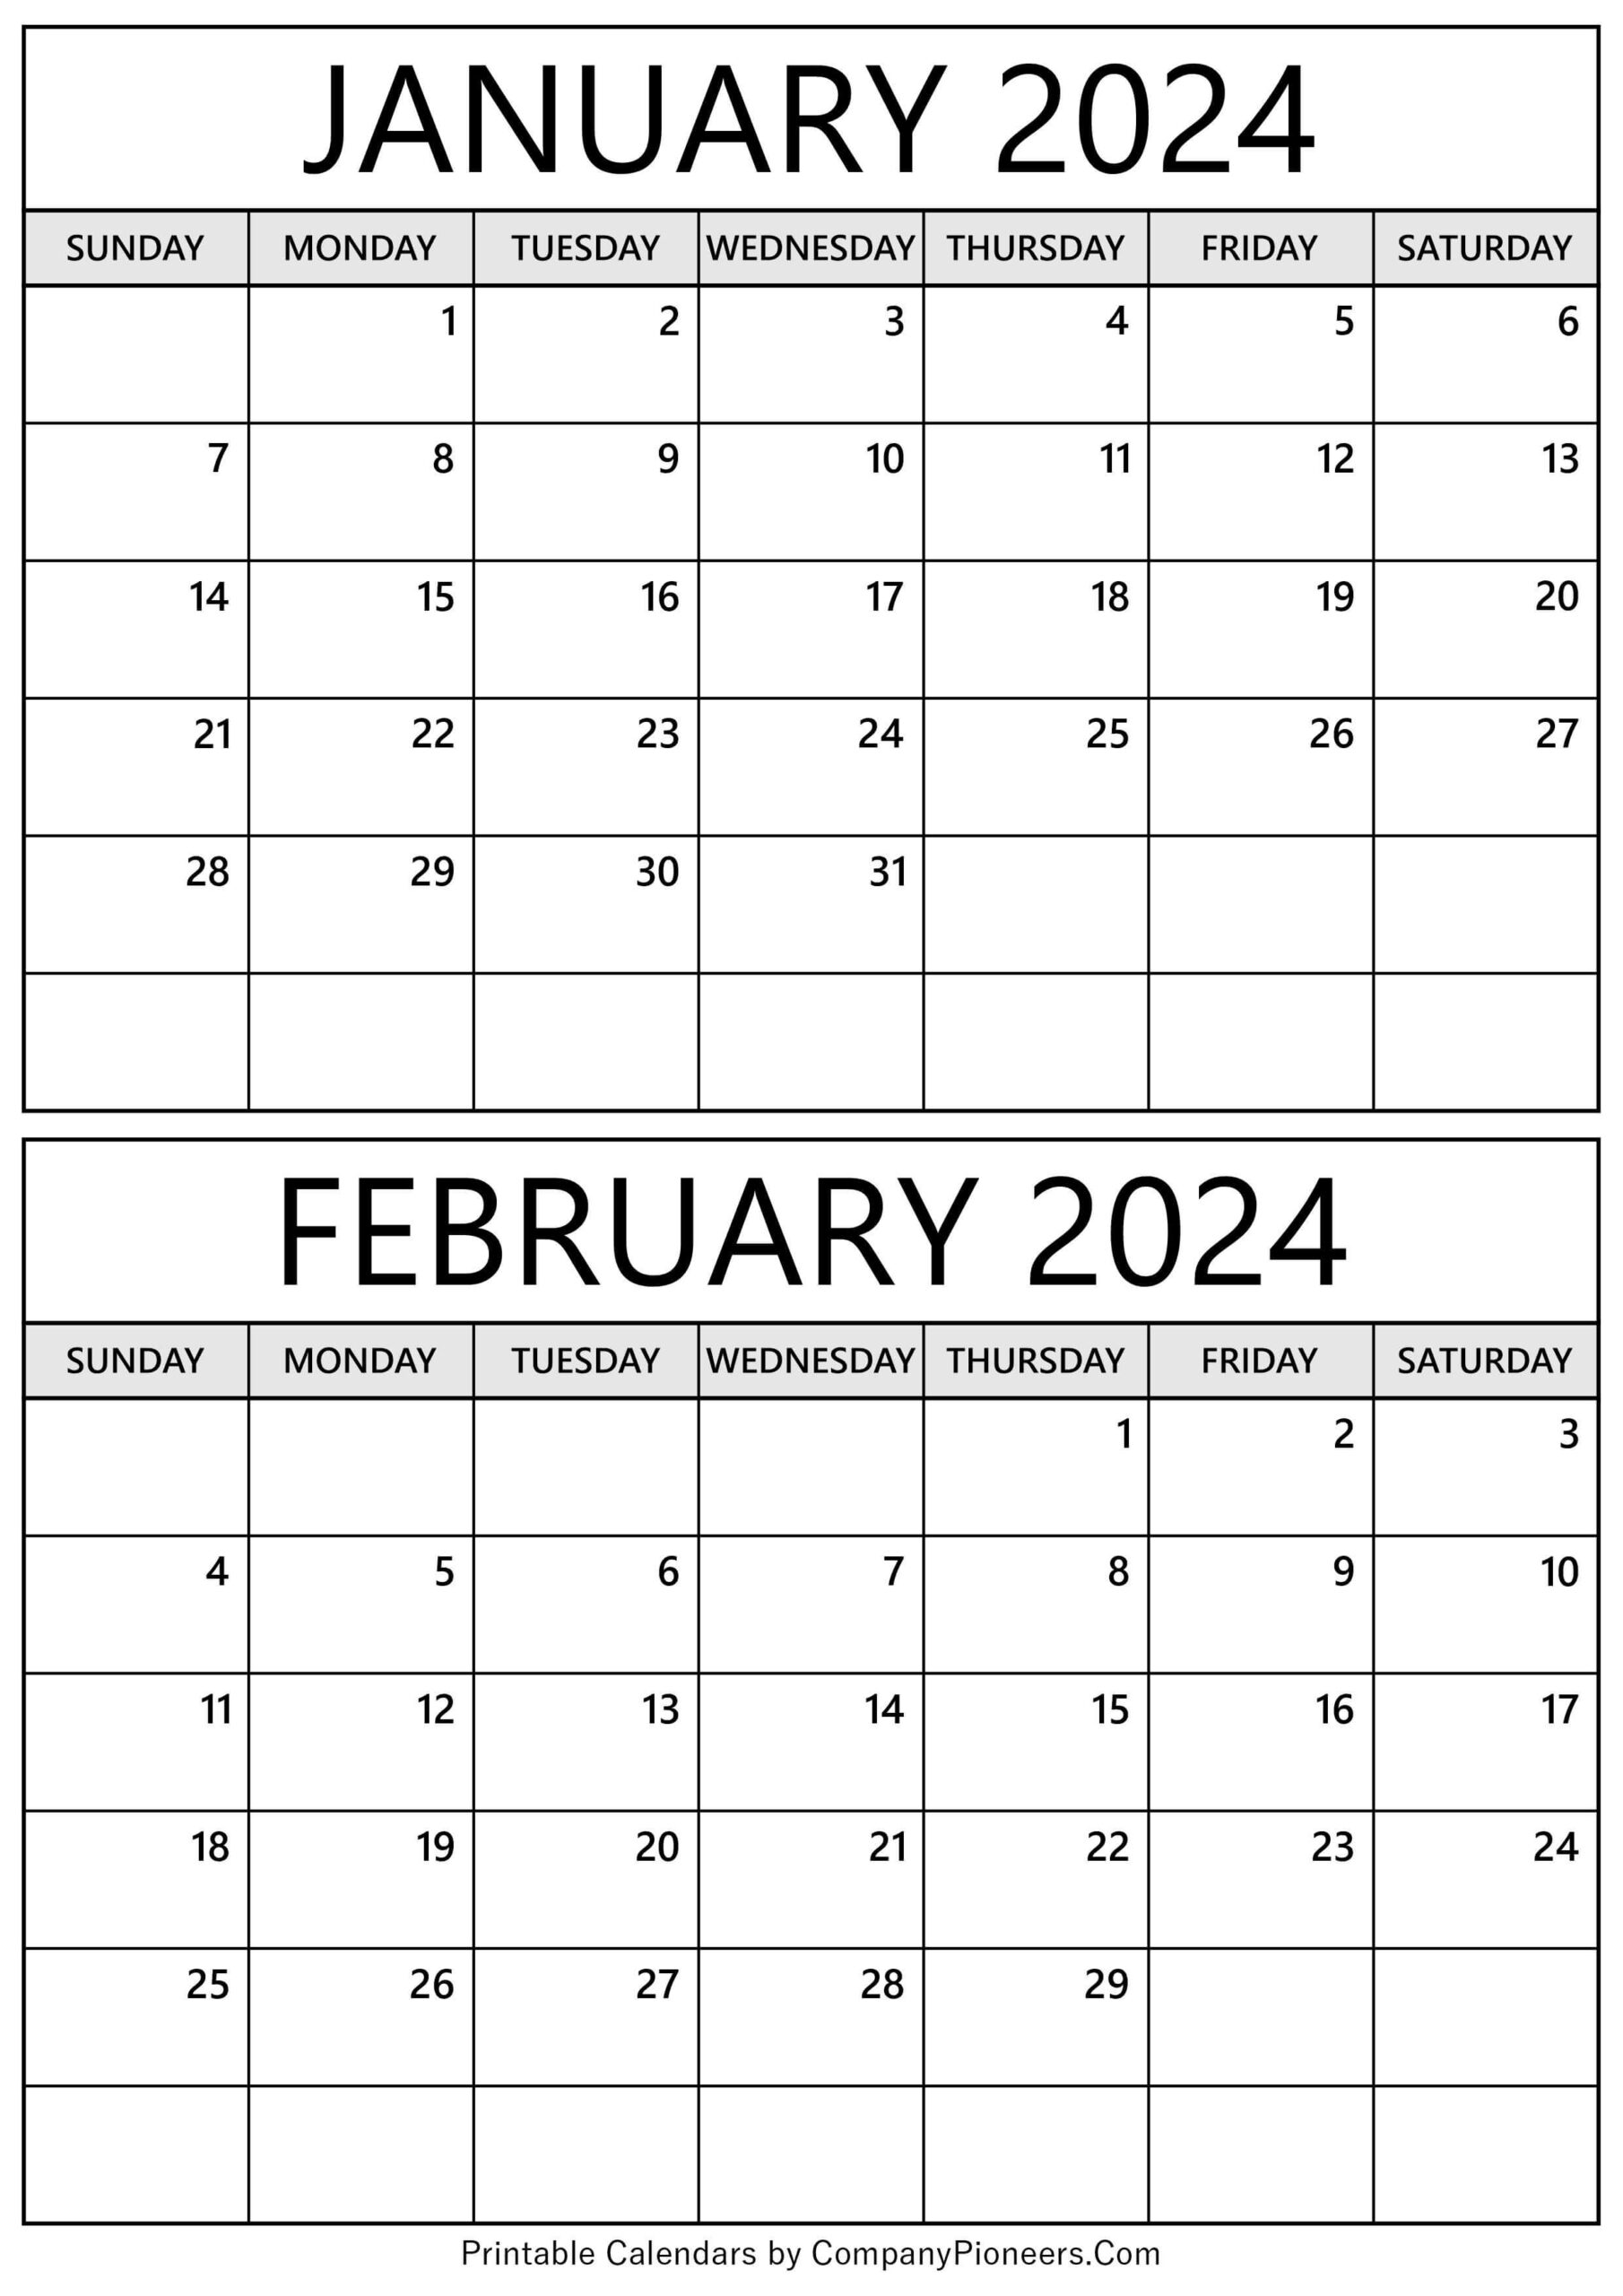 January February 2024 Calendar Printable - Template for January February Printable Calendar 2024